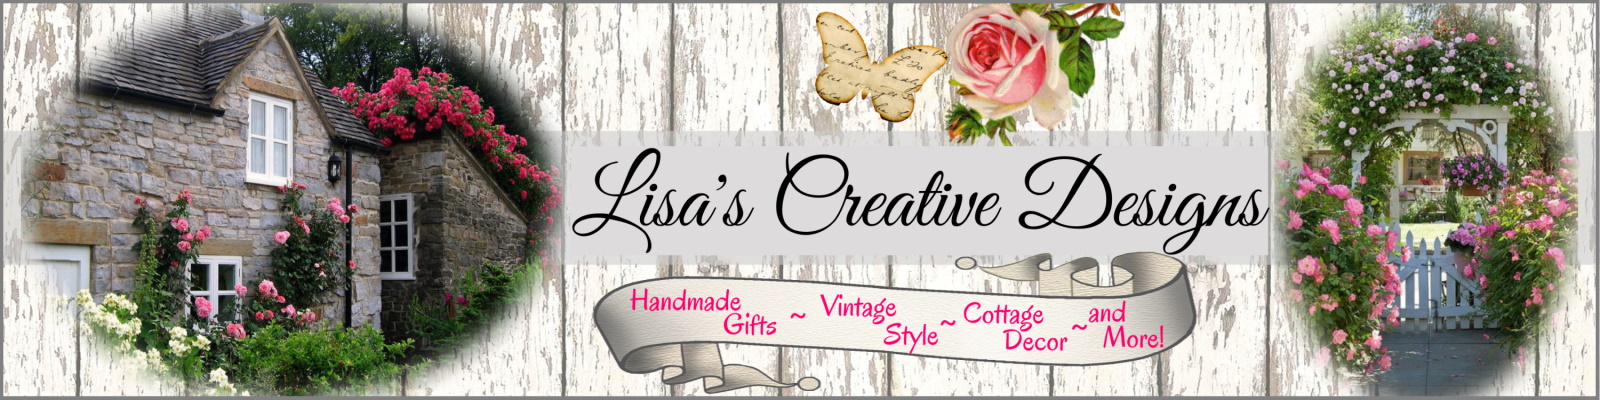 Lisa's Creative Designs